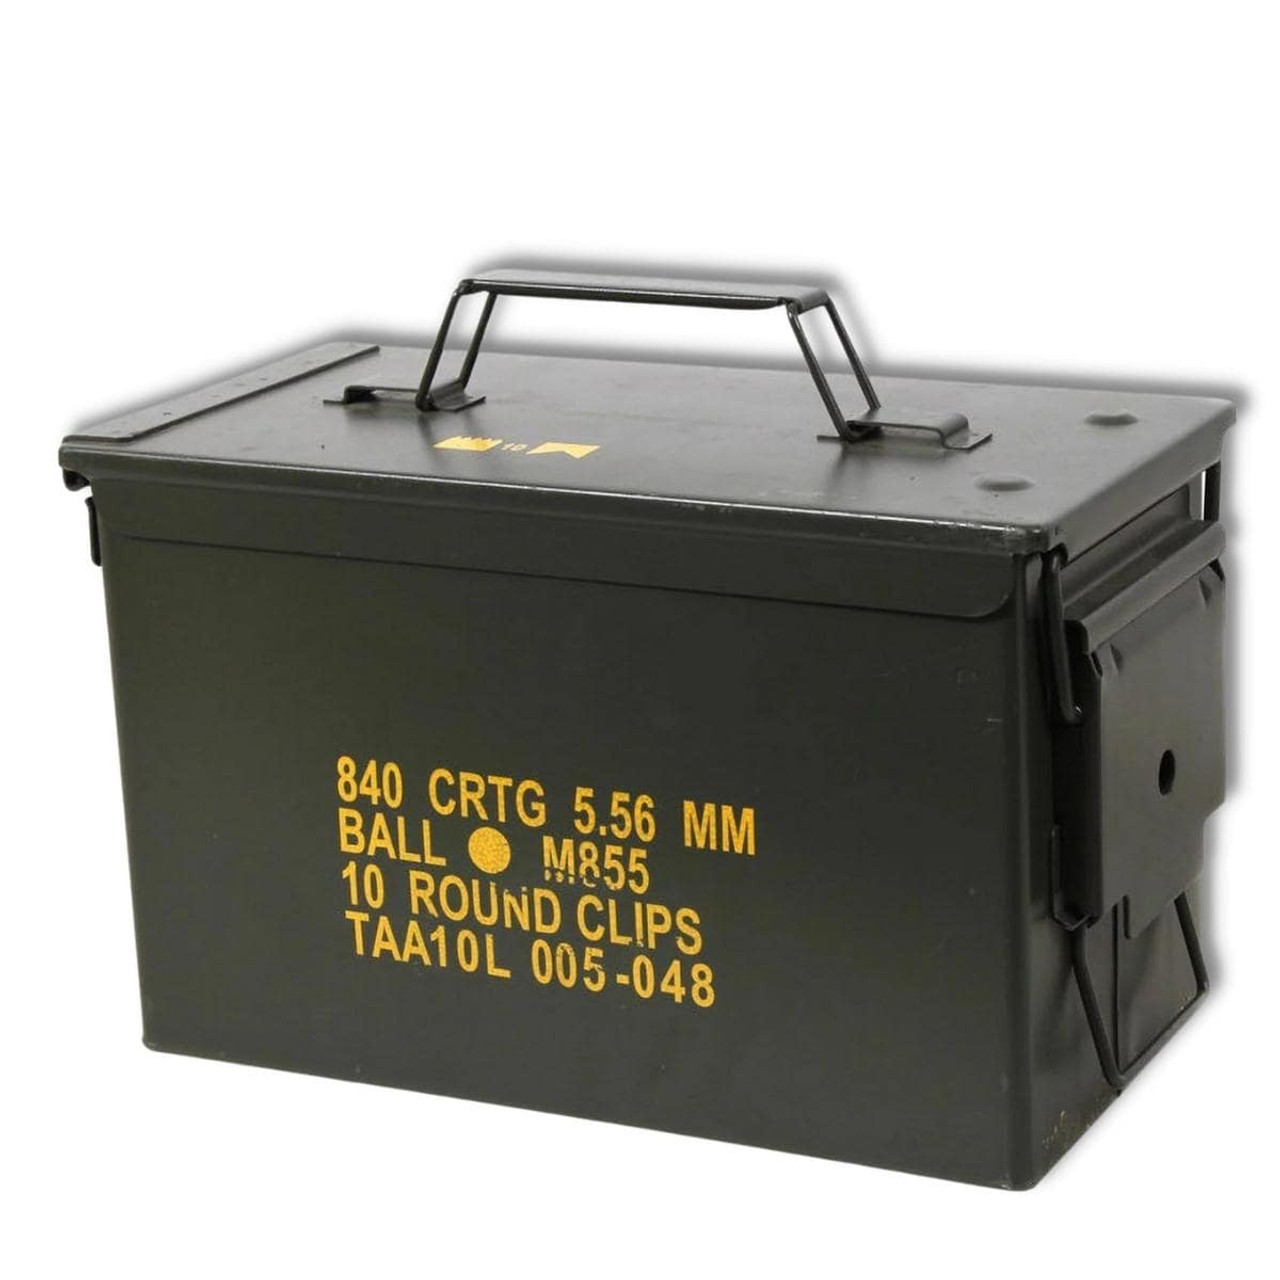 50 Cal Ammo Box Can M2A1